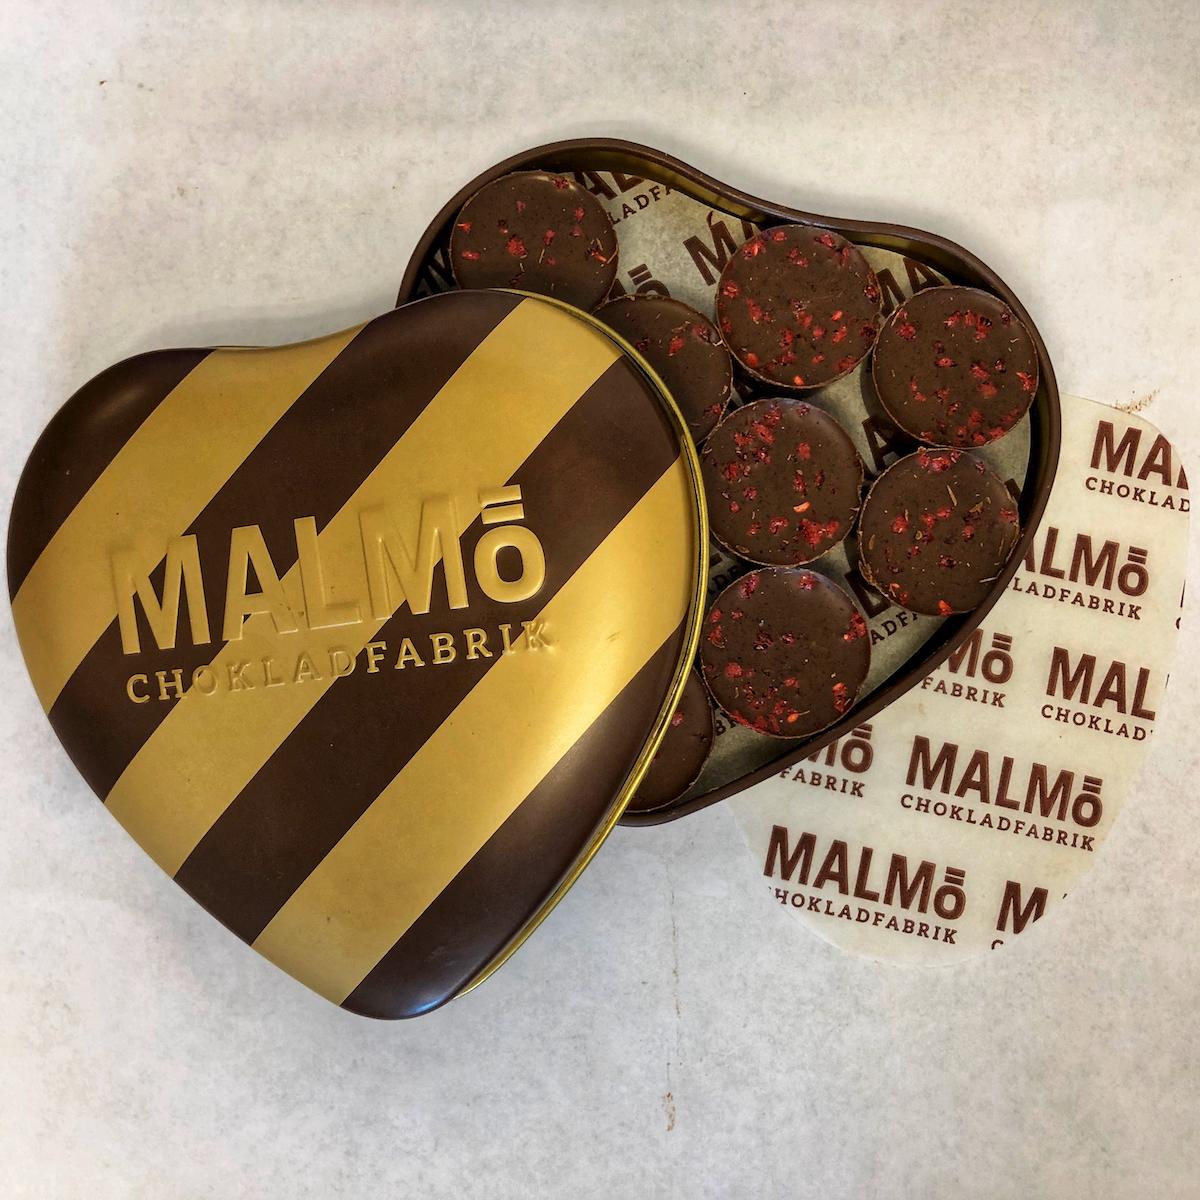 Malmö Chokladfabrik's Love '